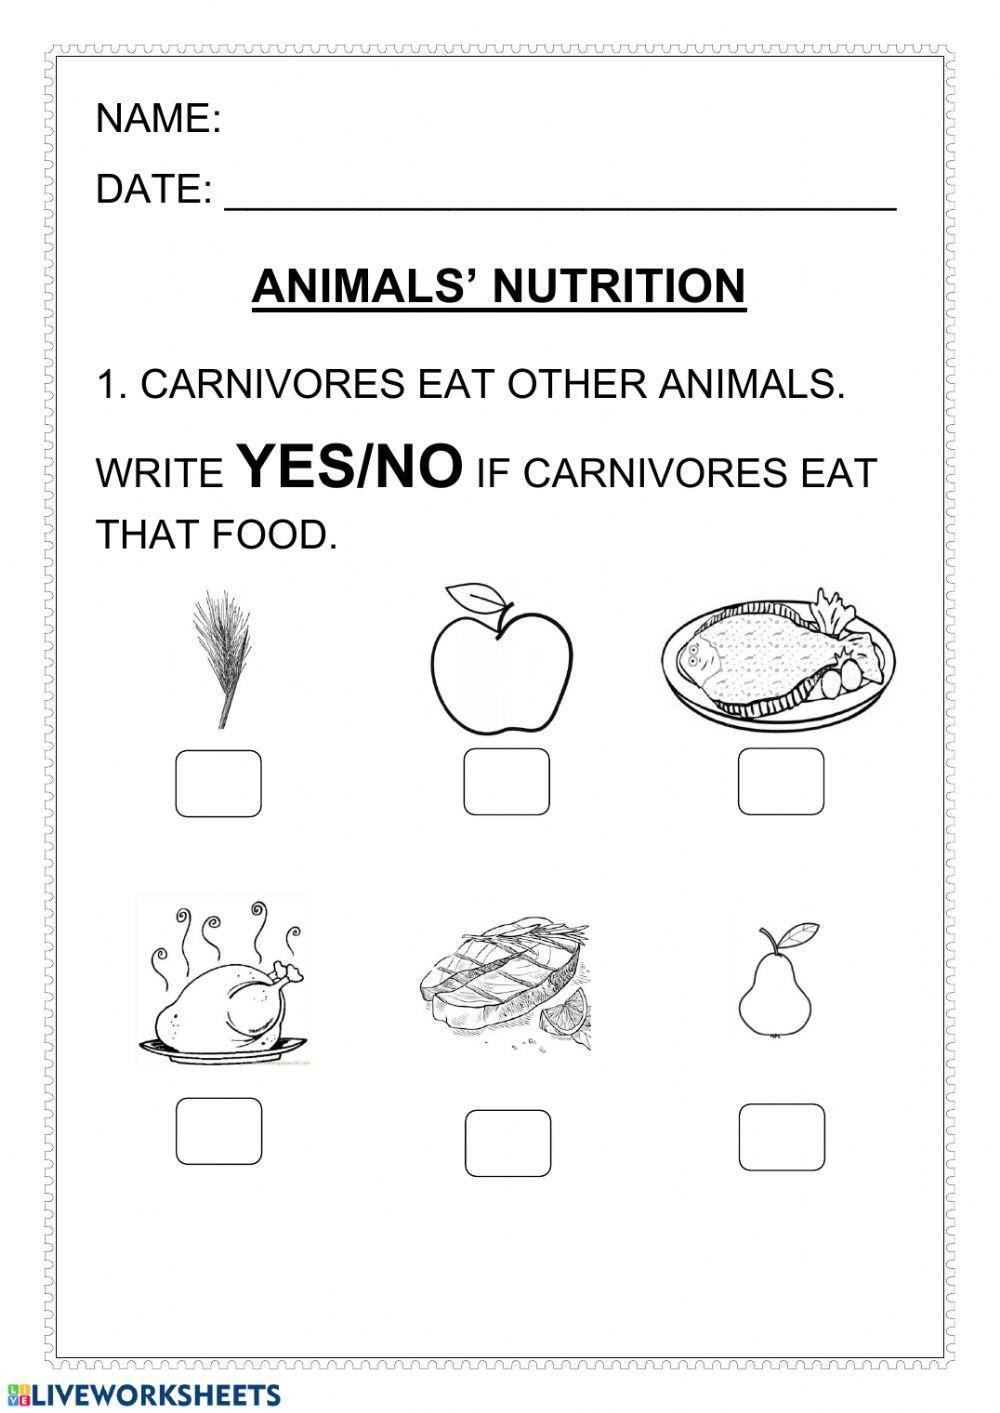 Animals nutrition